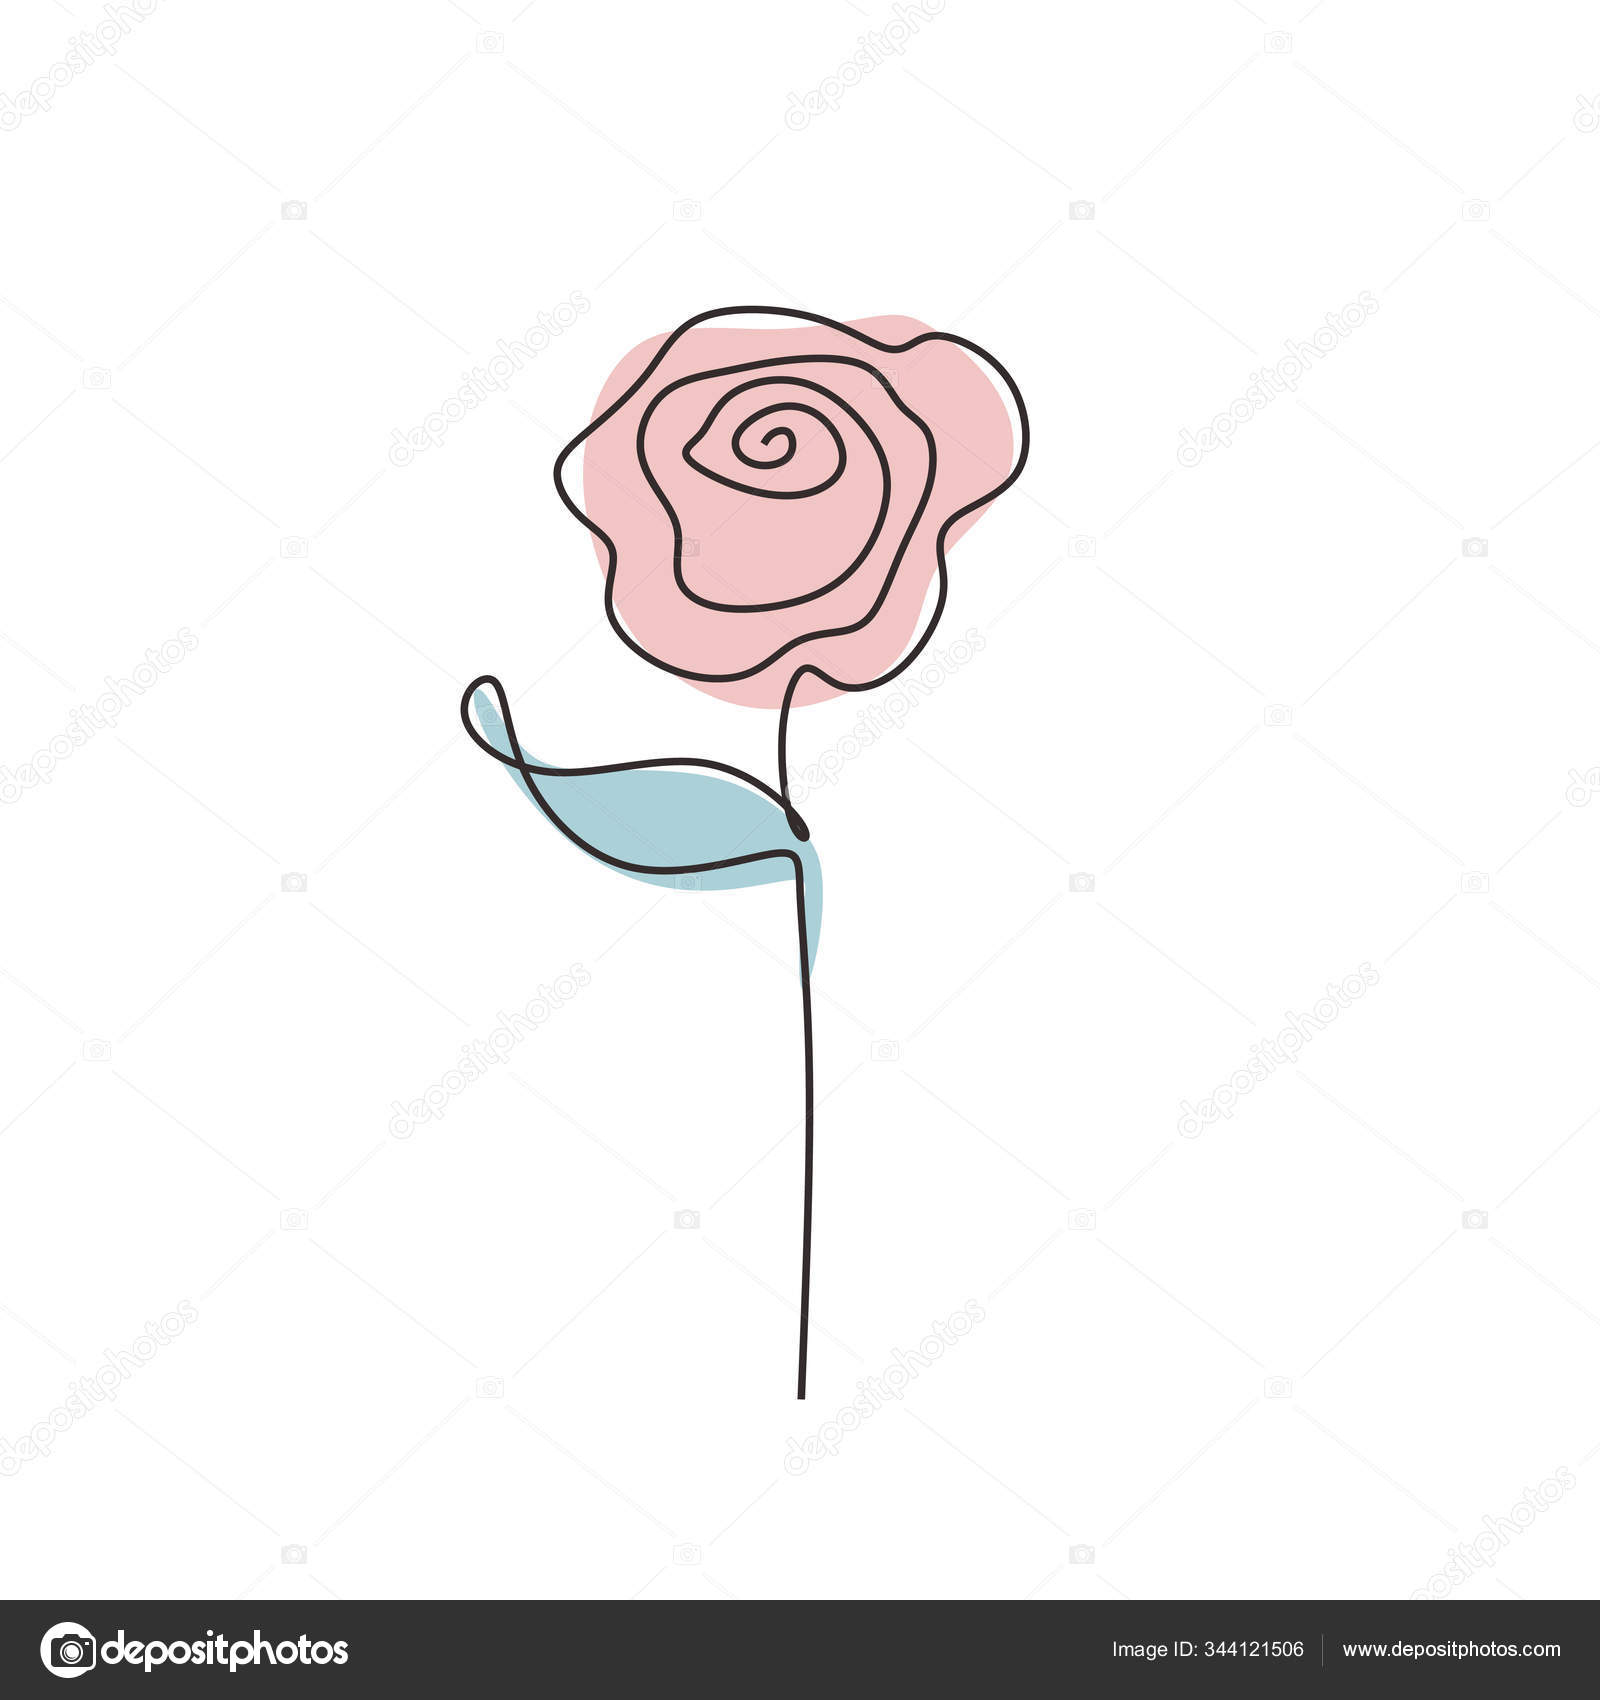 Rose Colored Line Art v2 - Leix and Leiy - Digital Art, Flowers, Plants, &  Trees, Flowers, Flowers I-Z, Roses - ArtPal